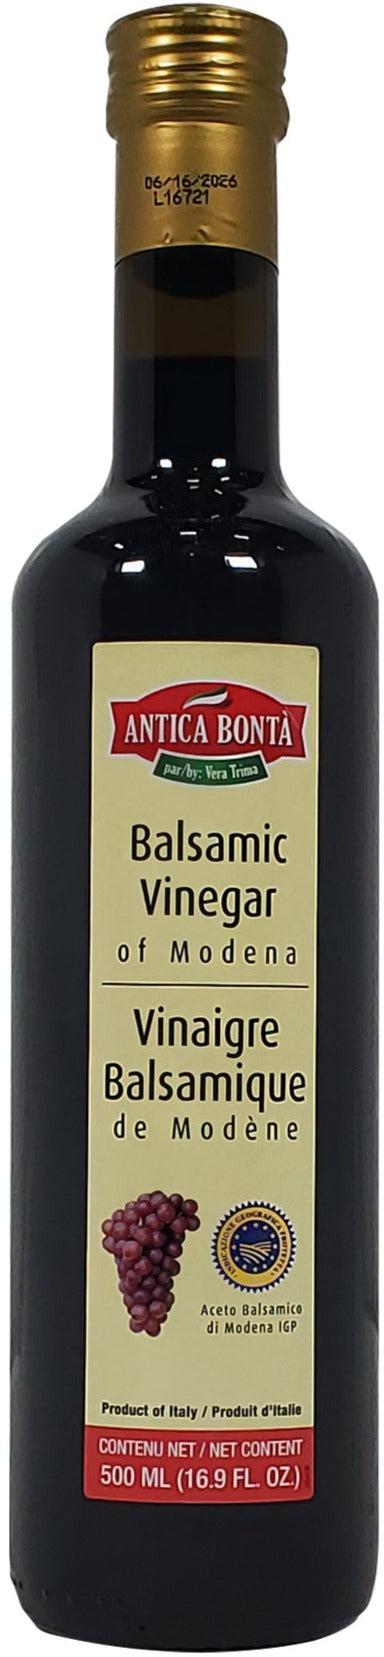 Antica Bonta - Balsamic Vinegar